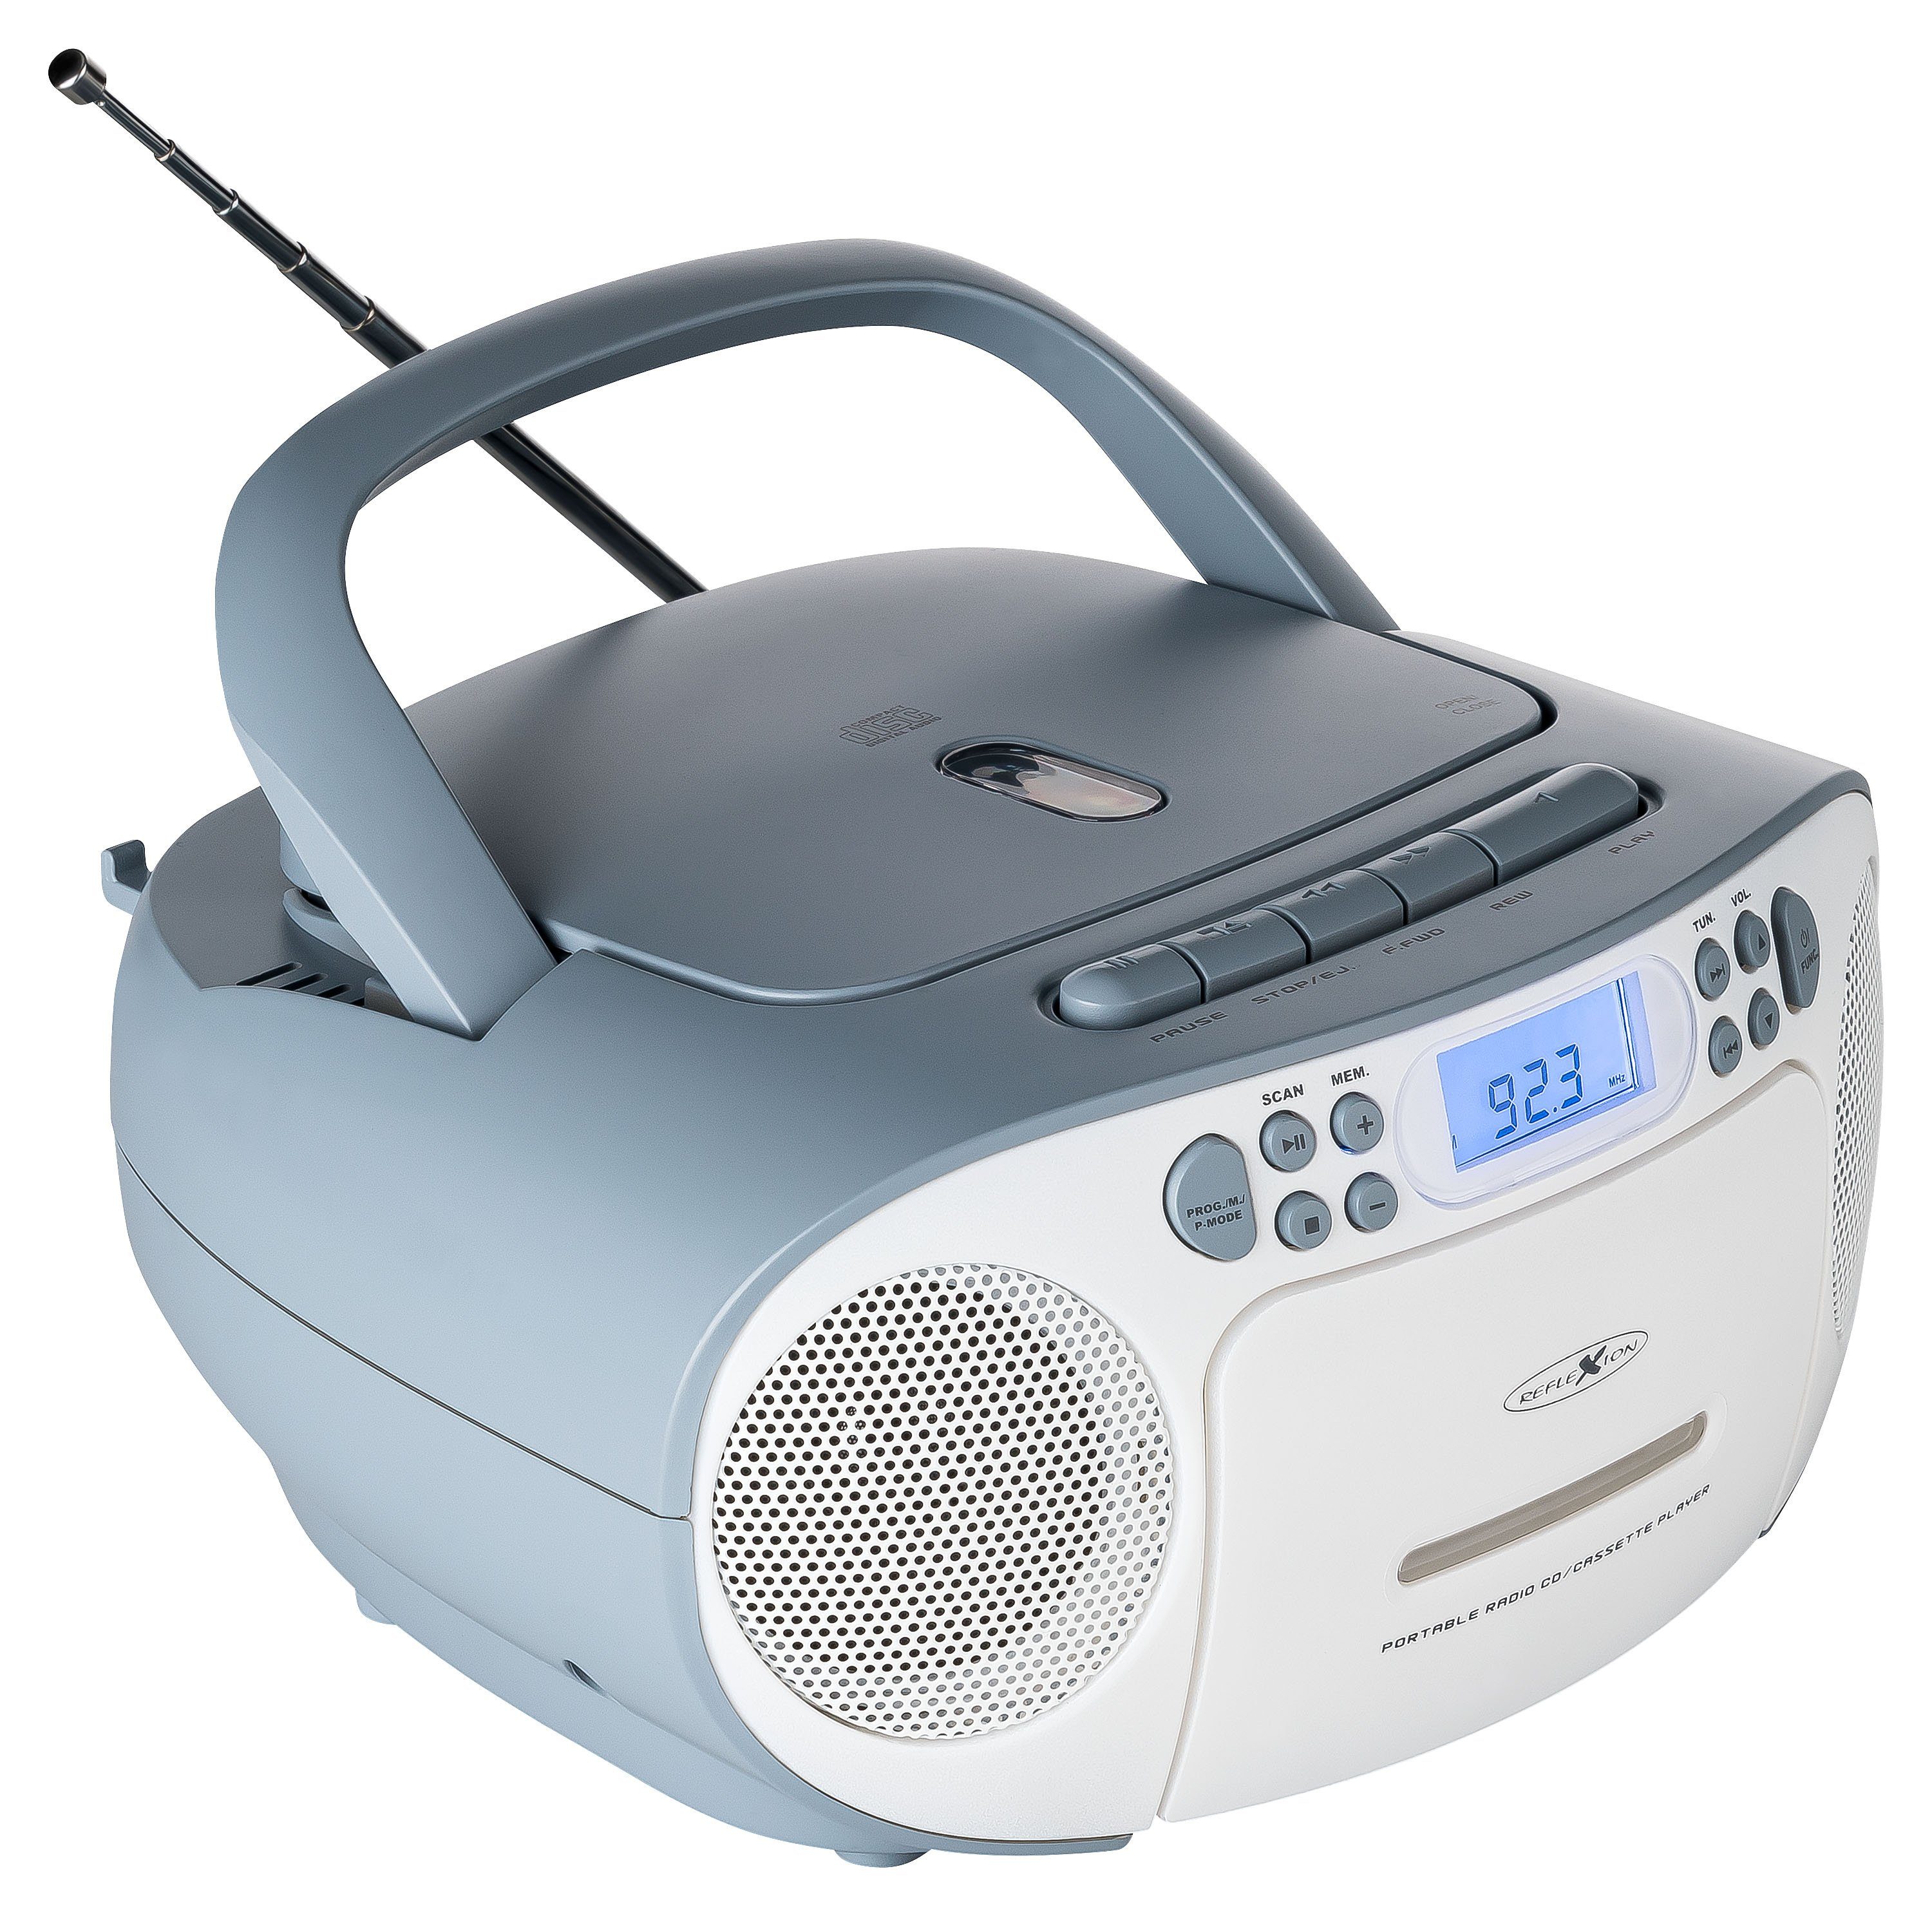 W, Boombox RCR2260 CD/Radio/Kassette, LCD-Display, weiß/blau Tragbare PLL (UKW Kopfhörer-Anschluss) Boombox AUX-Eingang, Radio, Stereo Reflexion 20